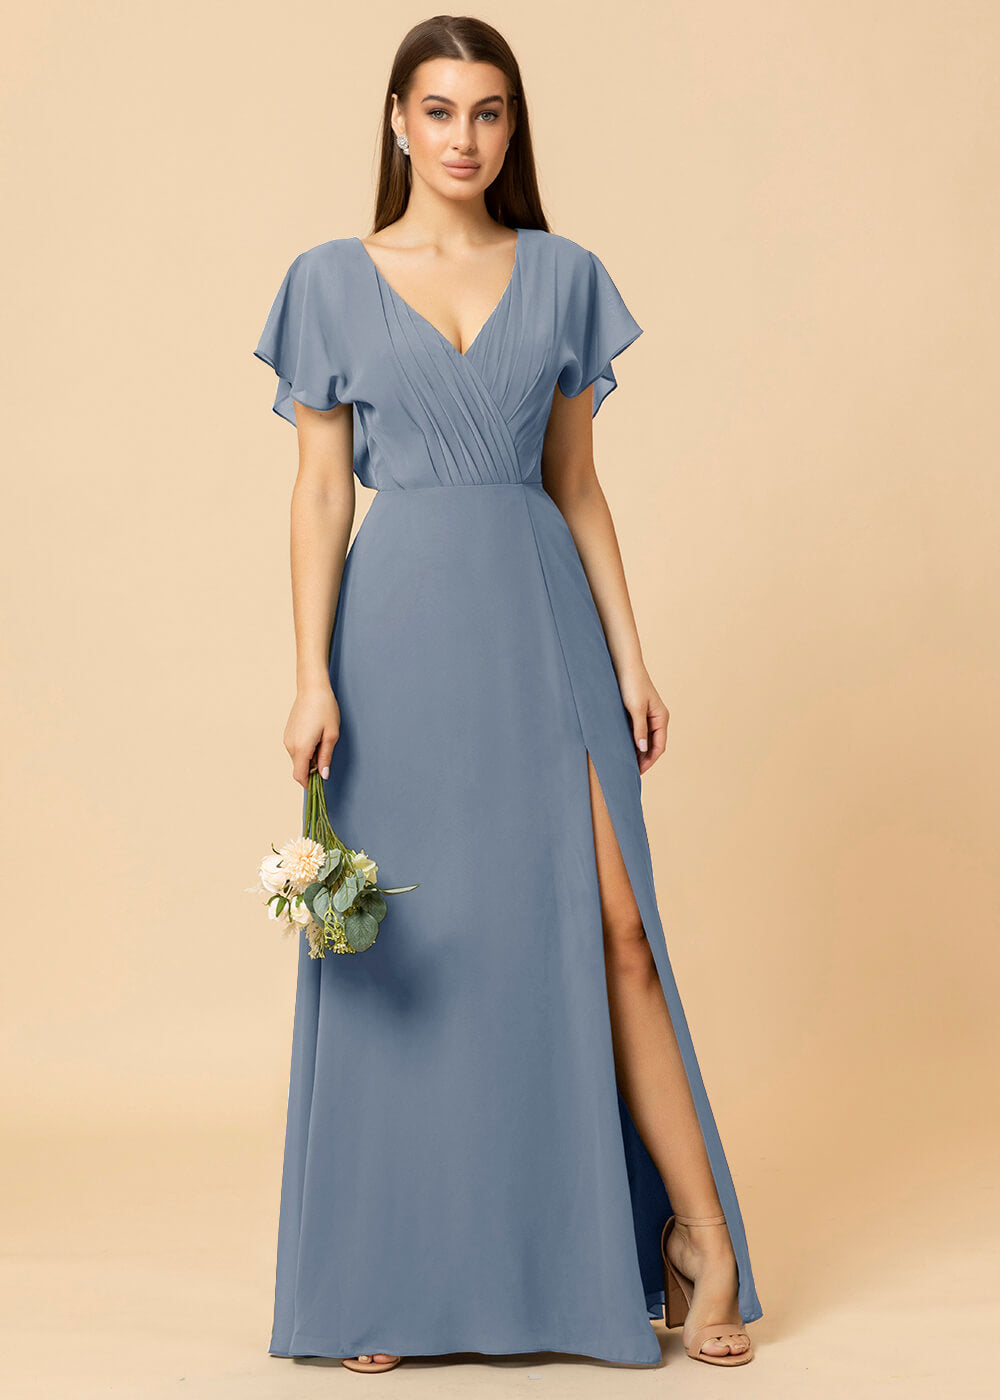 V-neck A-line Cap Sleeve Chiffon Long Bridesmaid Dress